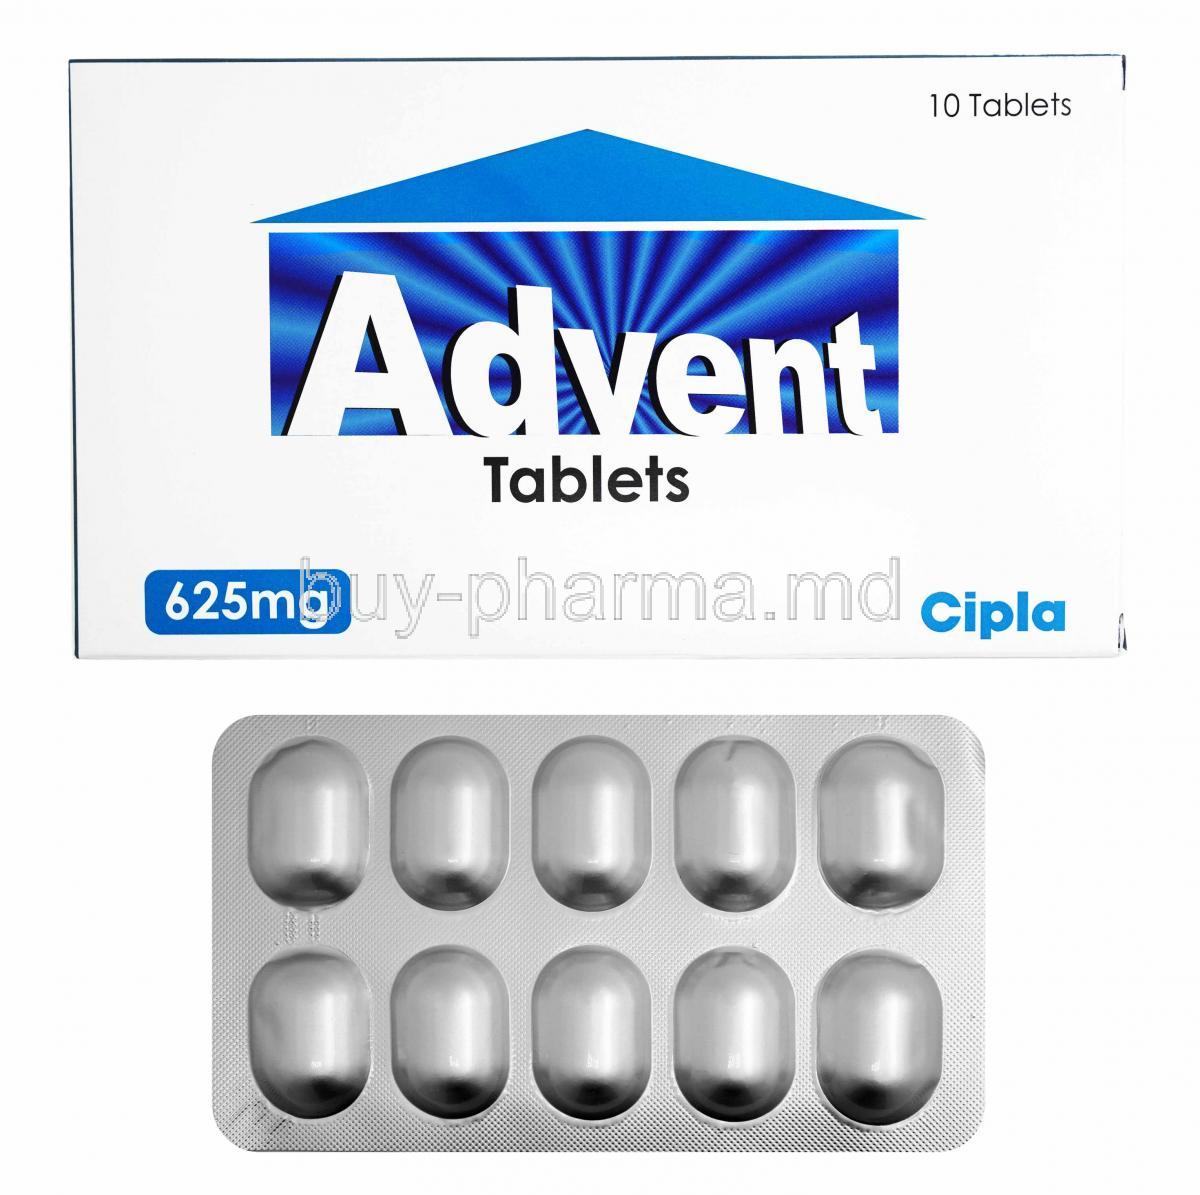 Advent, Amoxycillin and Clavulanic Acid box and tablets